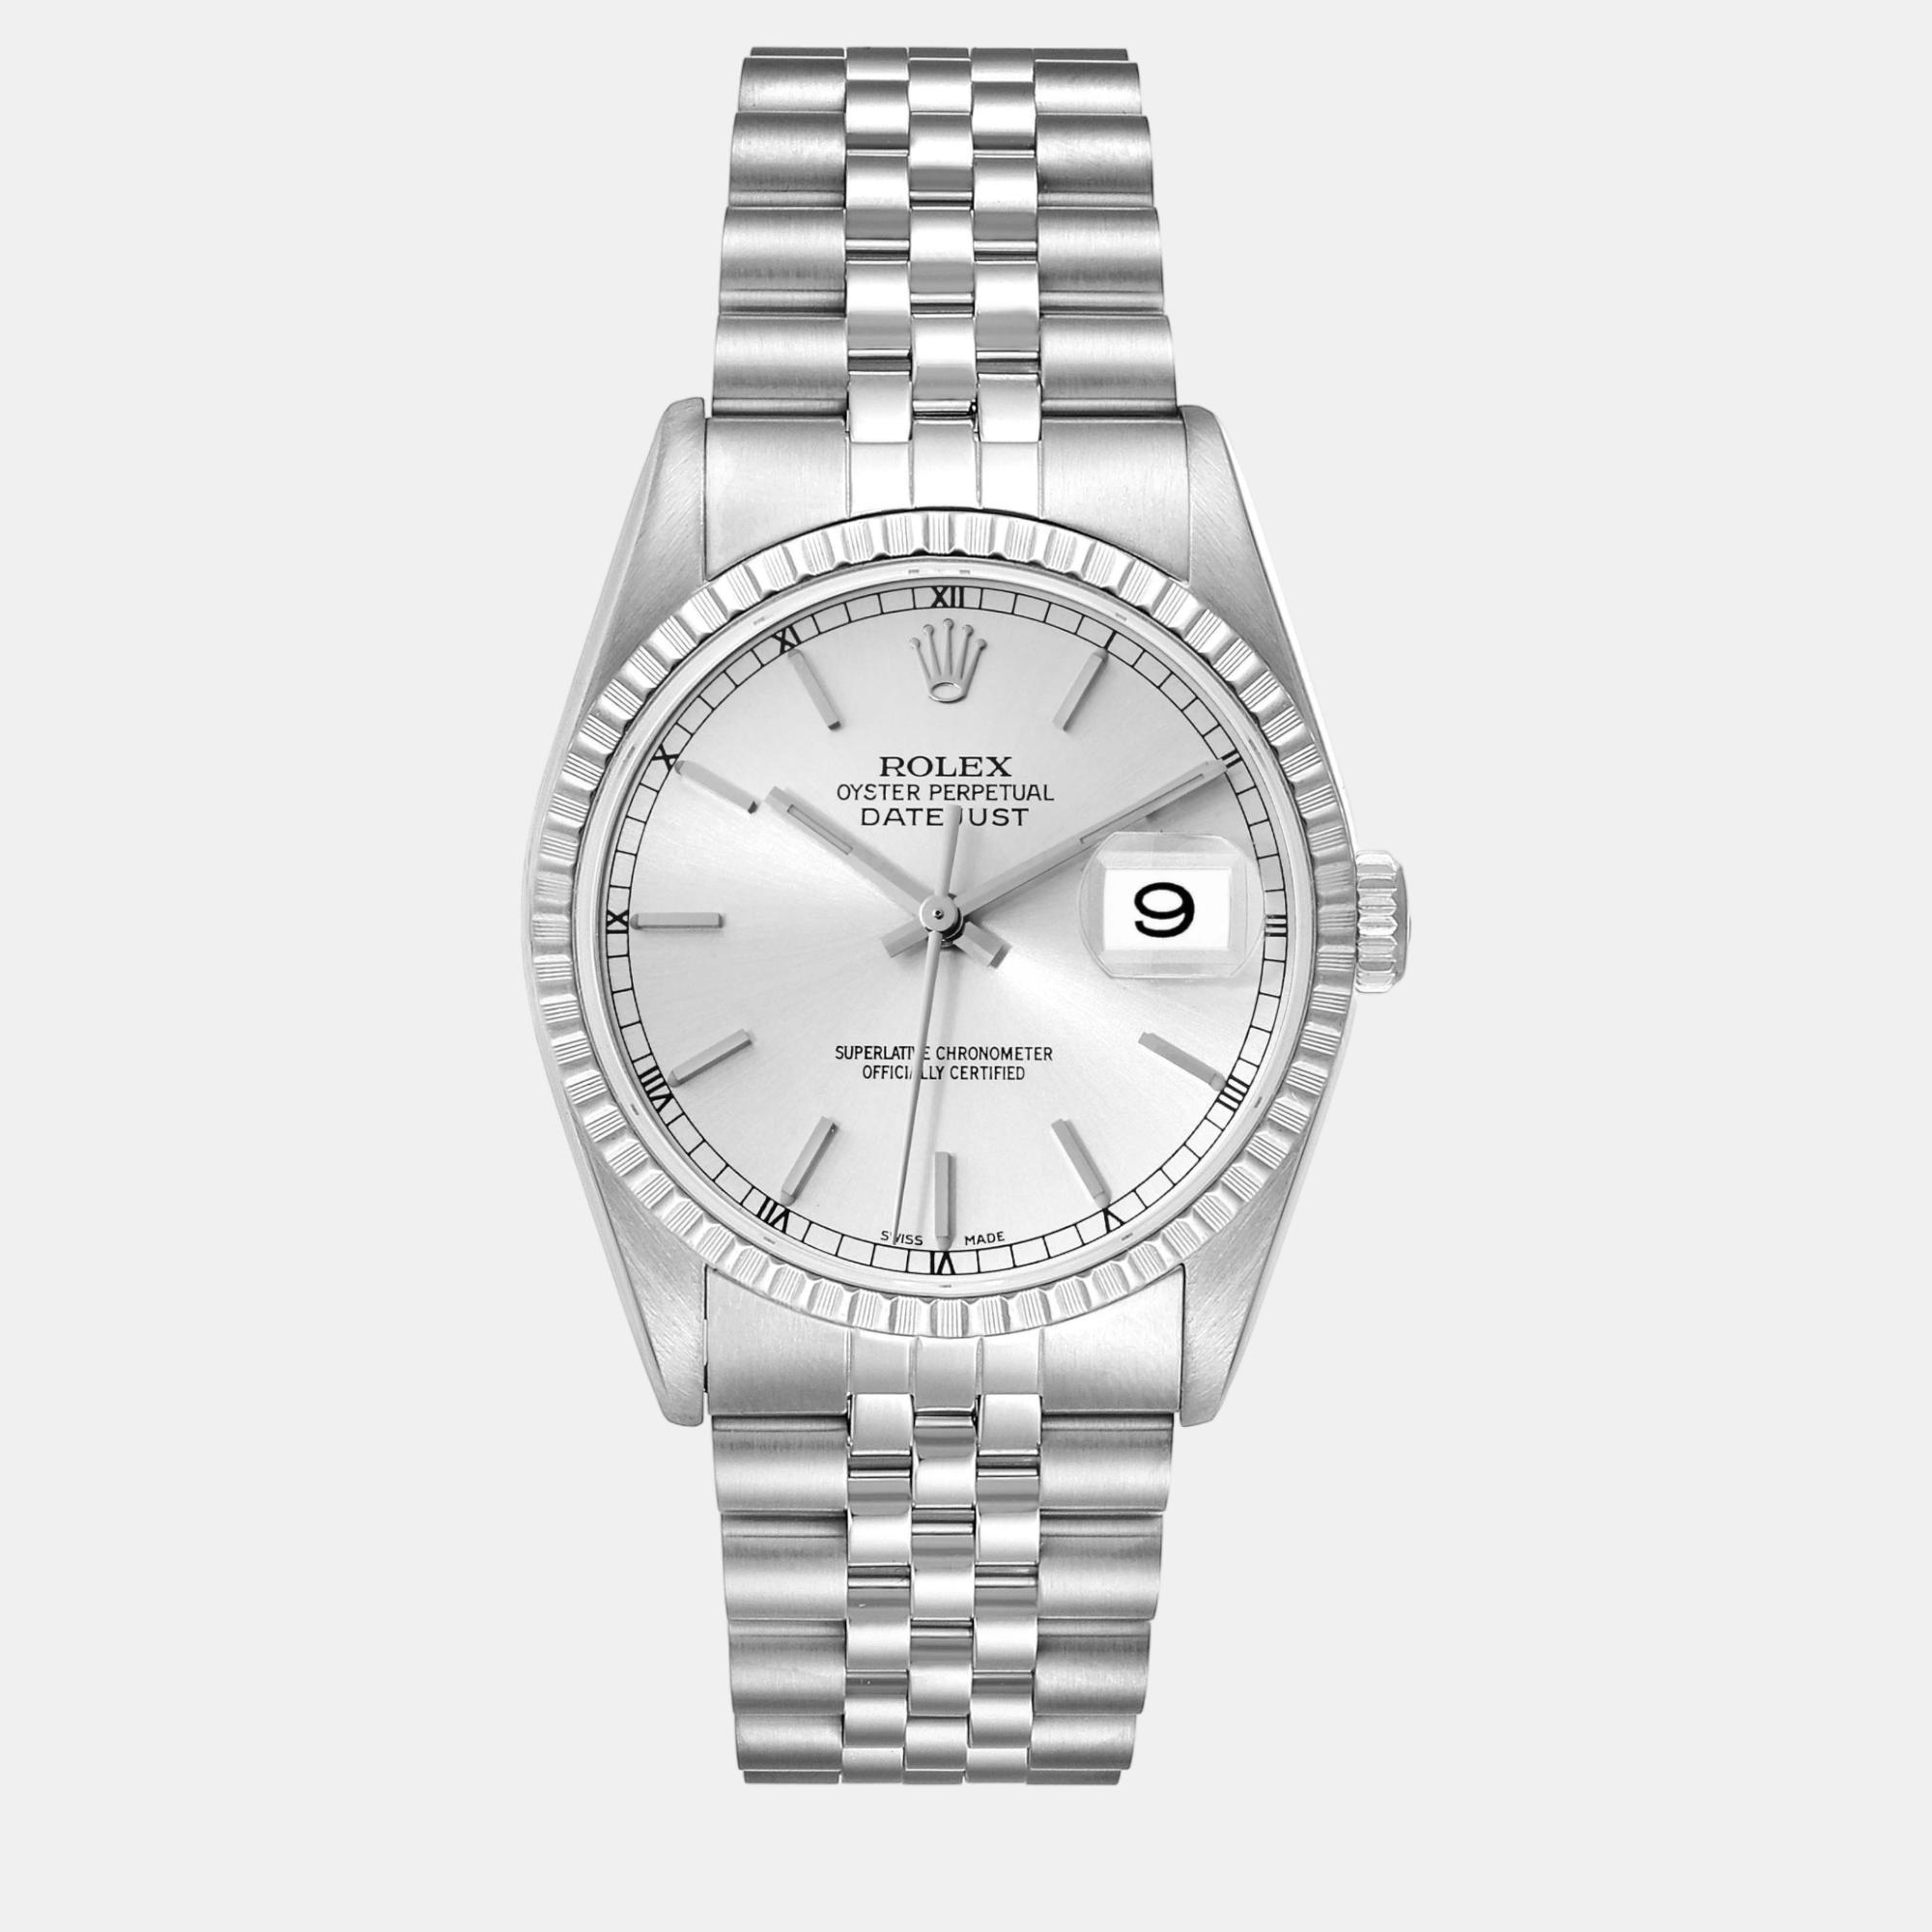 Rolex datejust silver dial engine turned bezel steel mens watch 16220 36 mm